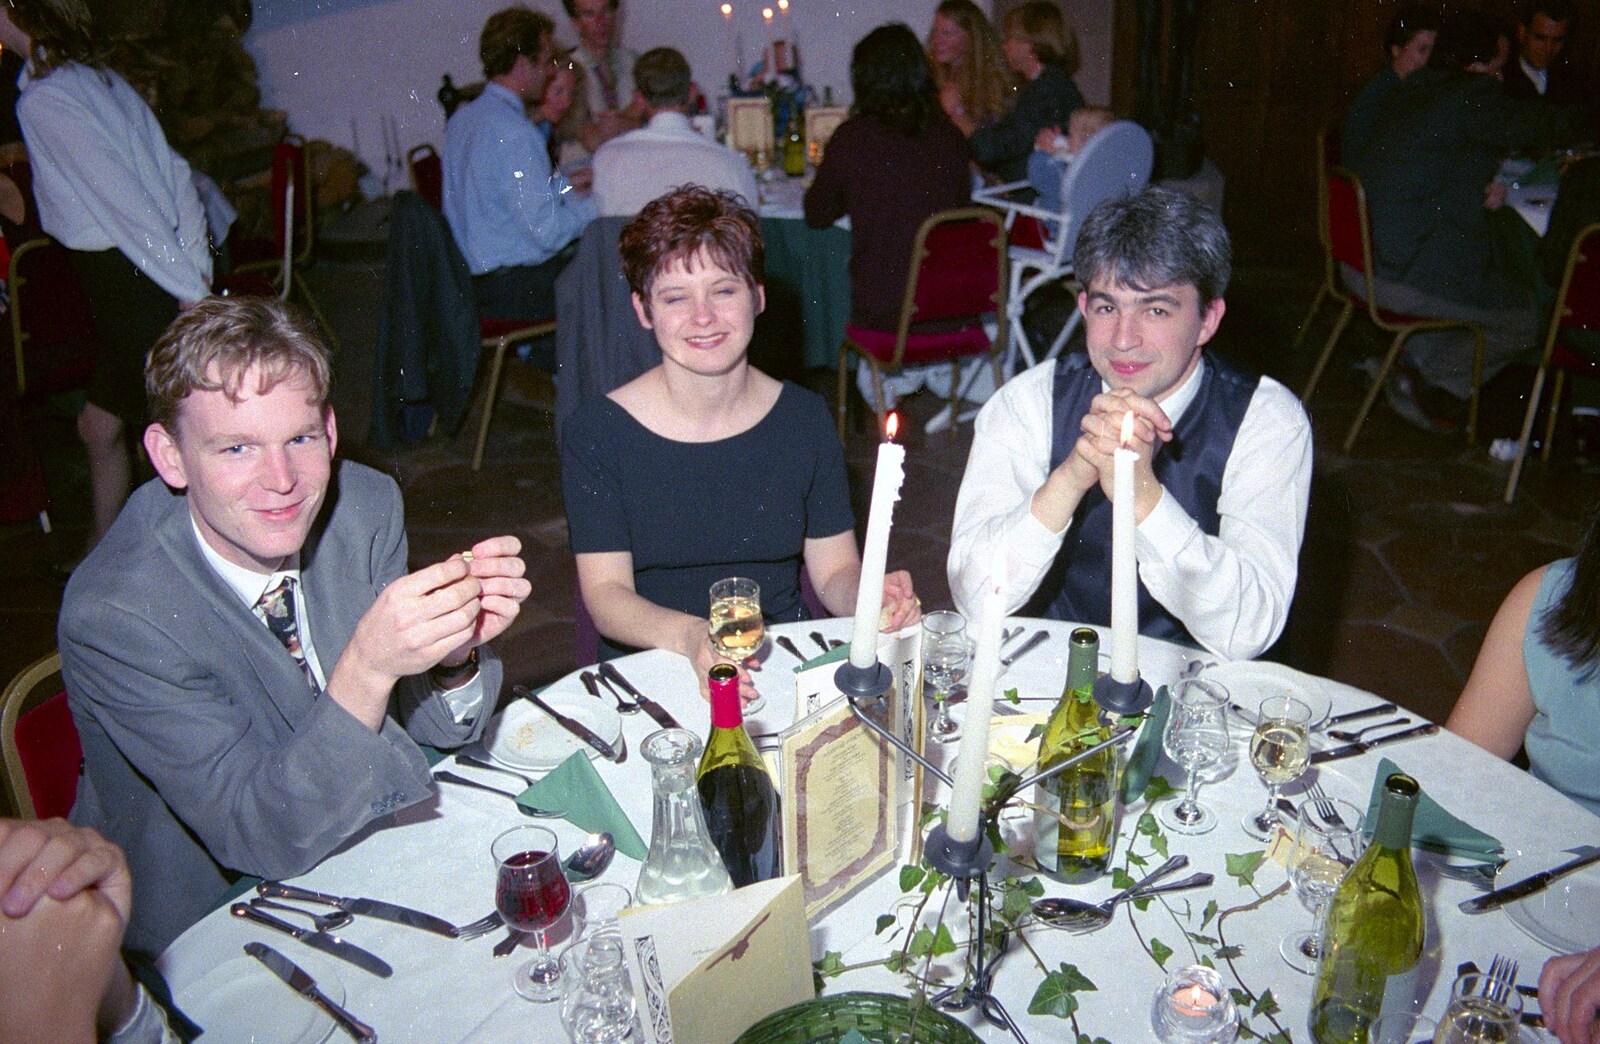 Stuart and Sarah's CISU Wedding, Naworth Castle, Brampton, Cumbria - 21st September 1996: Joe, Lisa and Neil